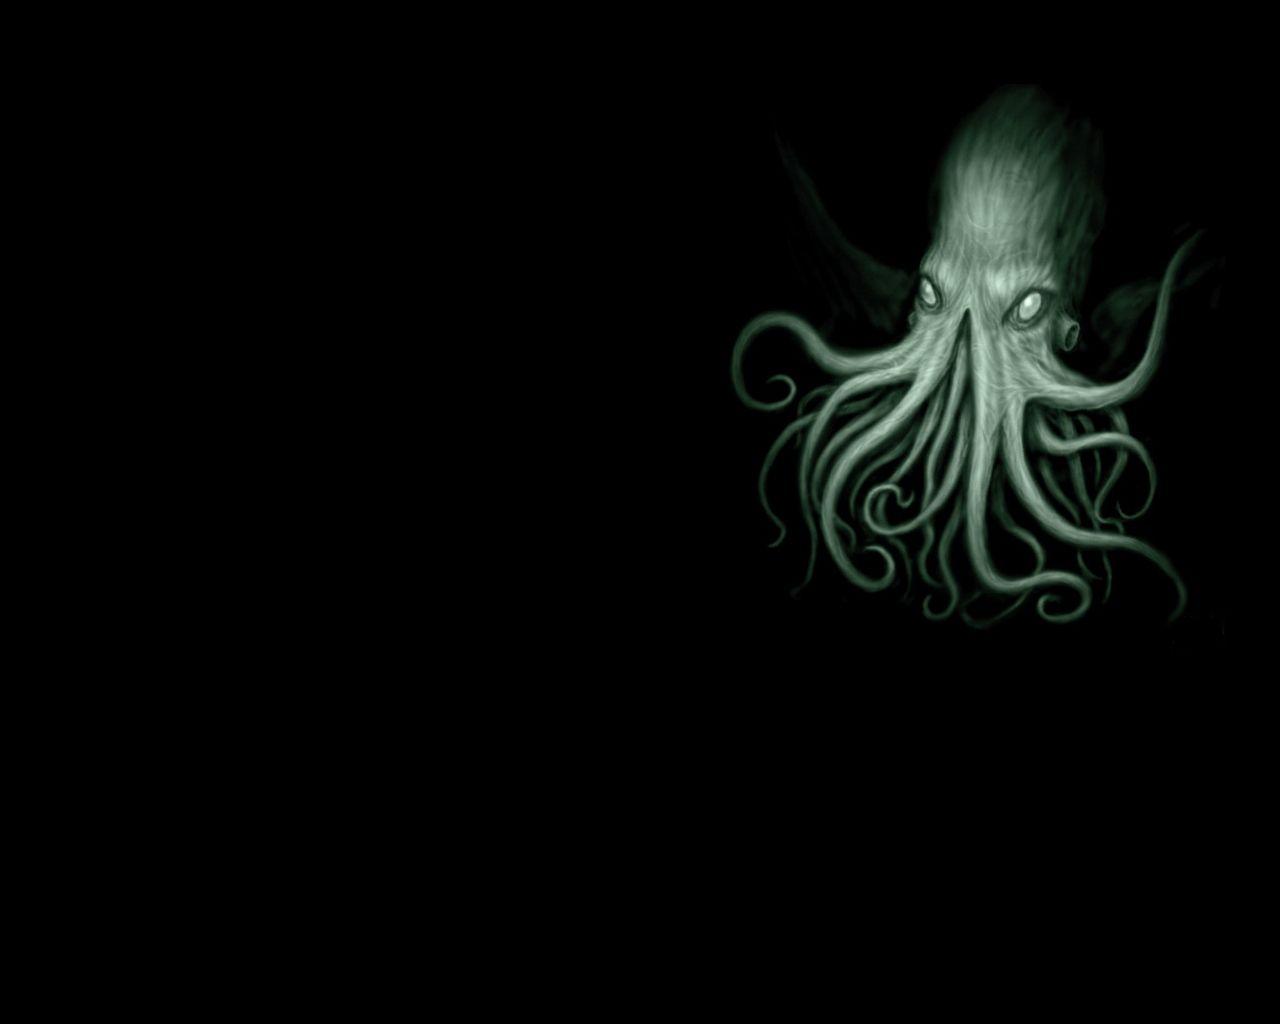 cthulhu octopus hp lovecraft 1280x1024 wallpaper High Quality